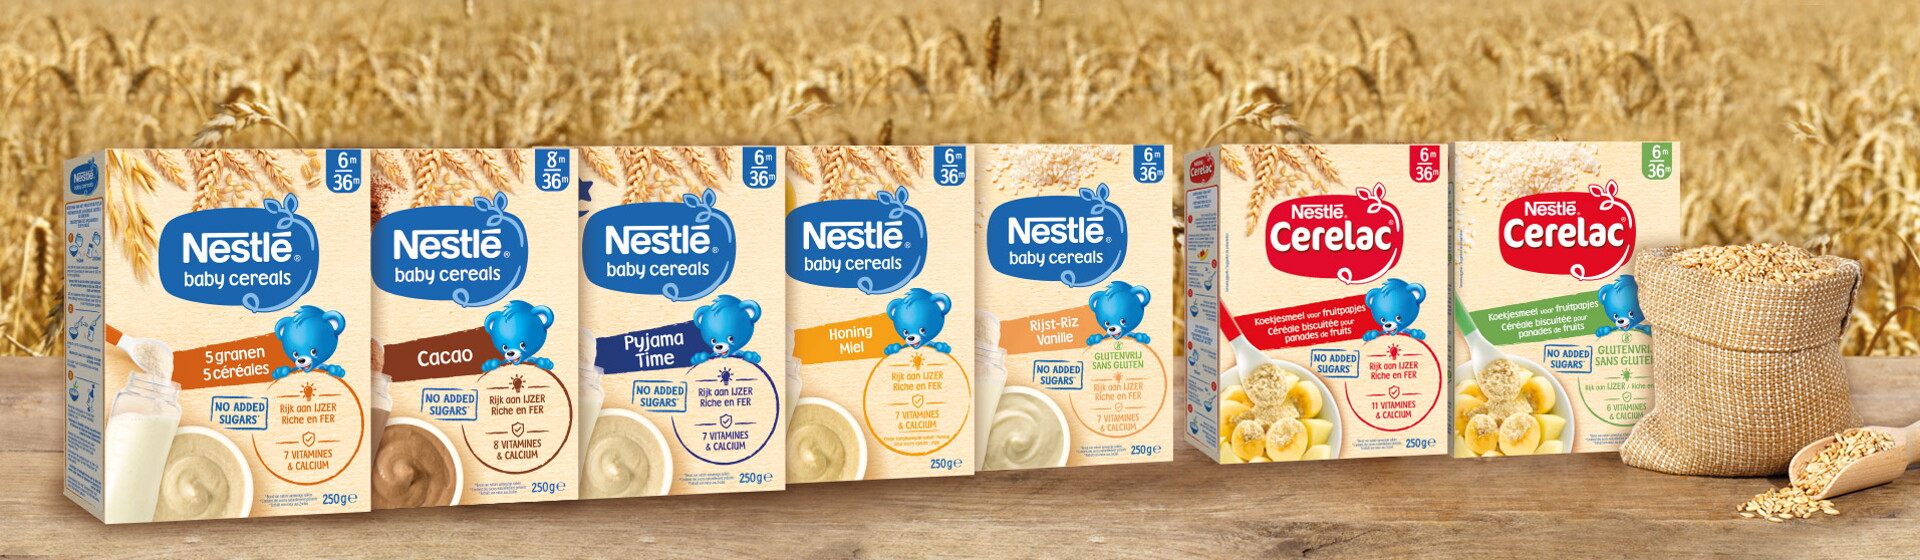 Nestlé Baby Cereals Range 